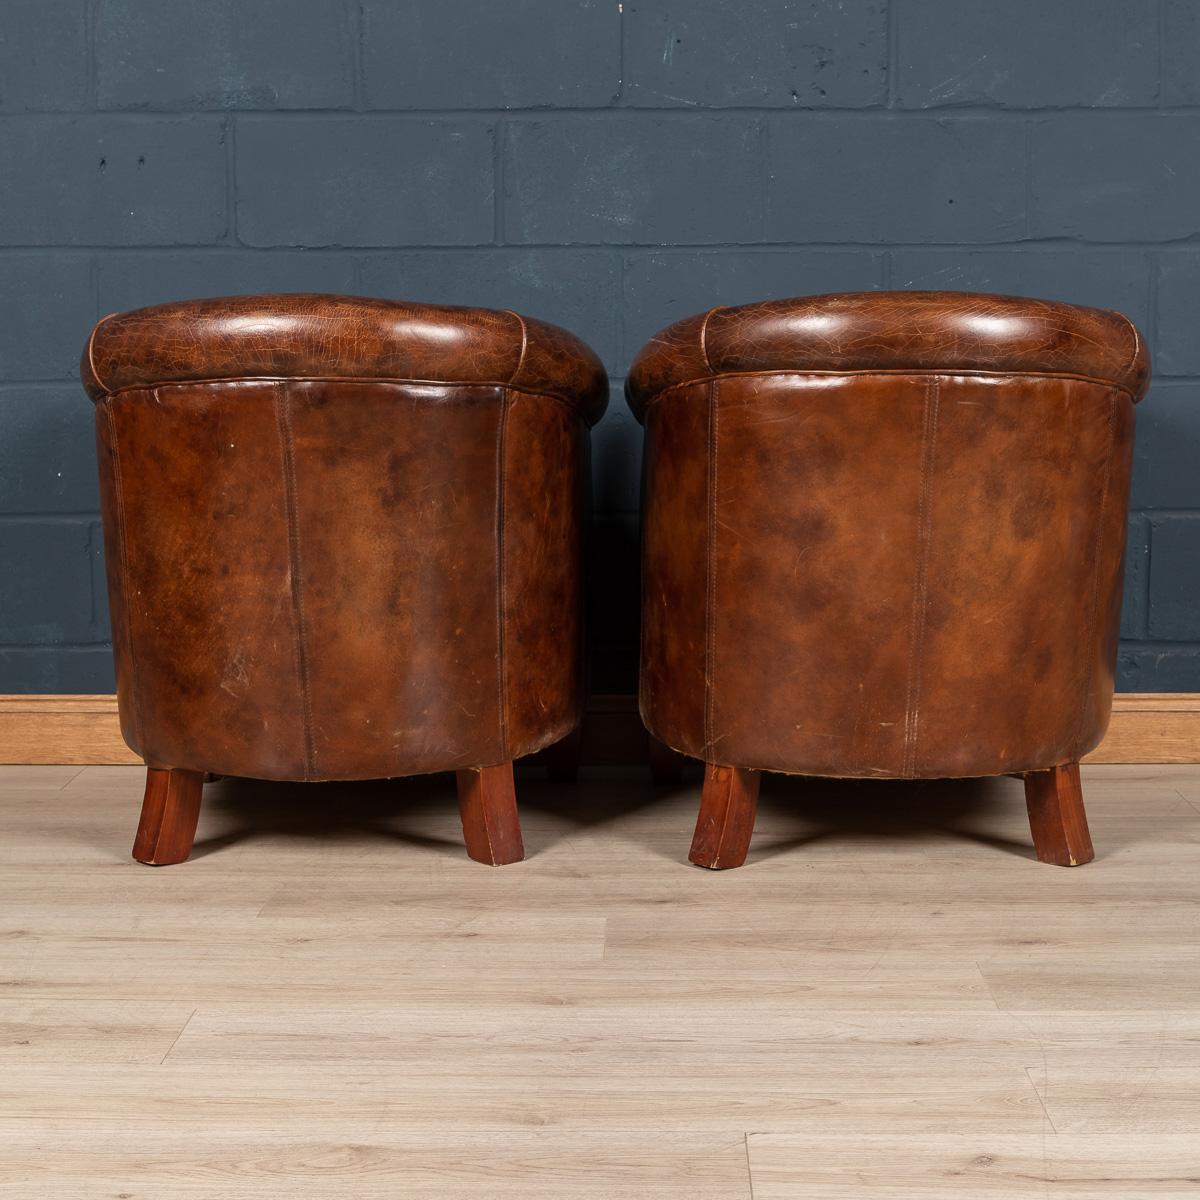 British 20th Century Pair of English Sheepskin Leather Tub Chairs